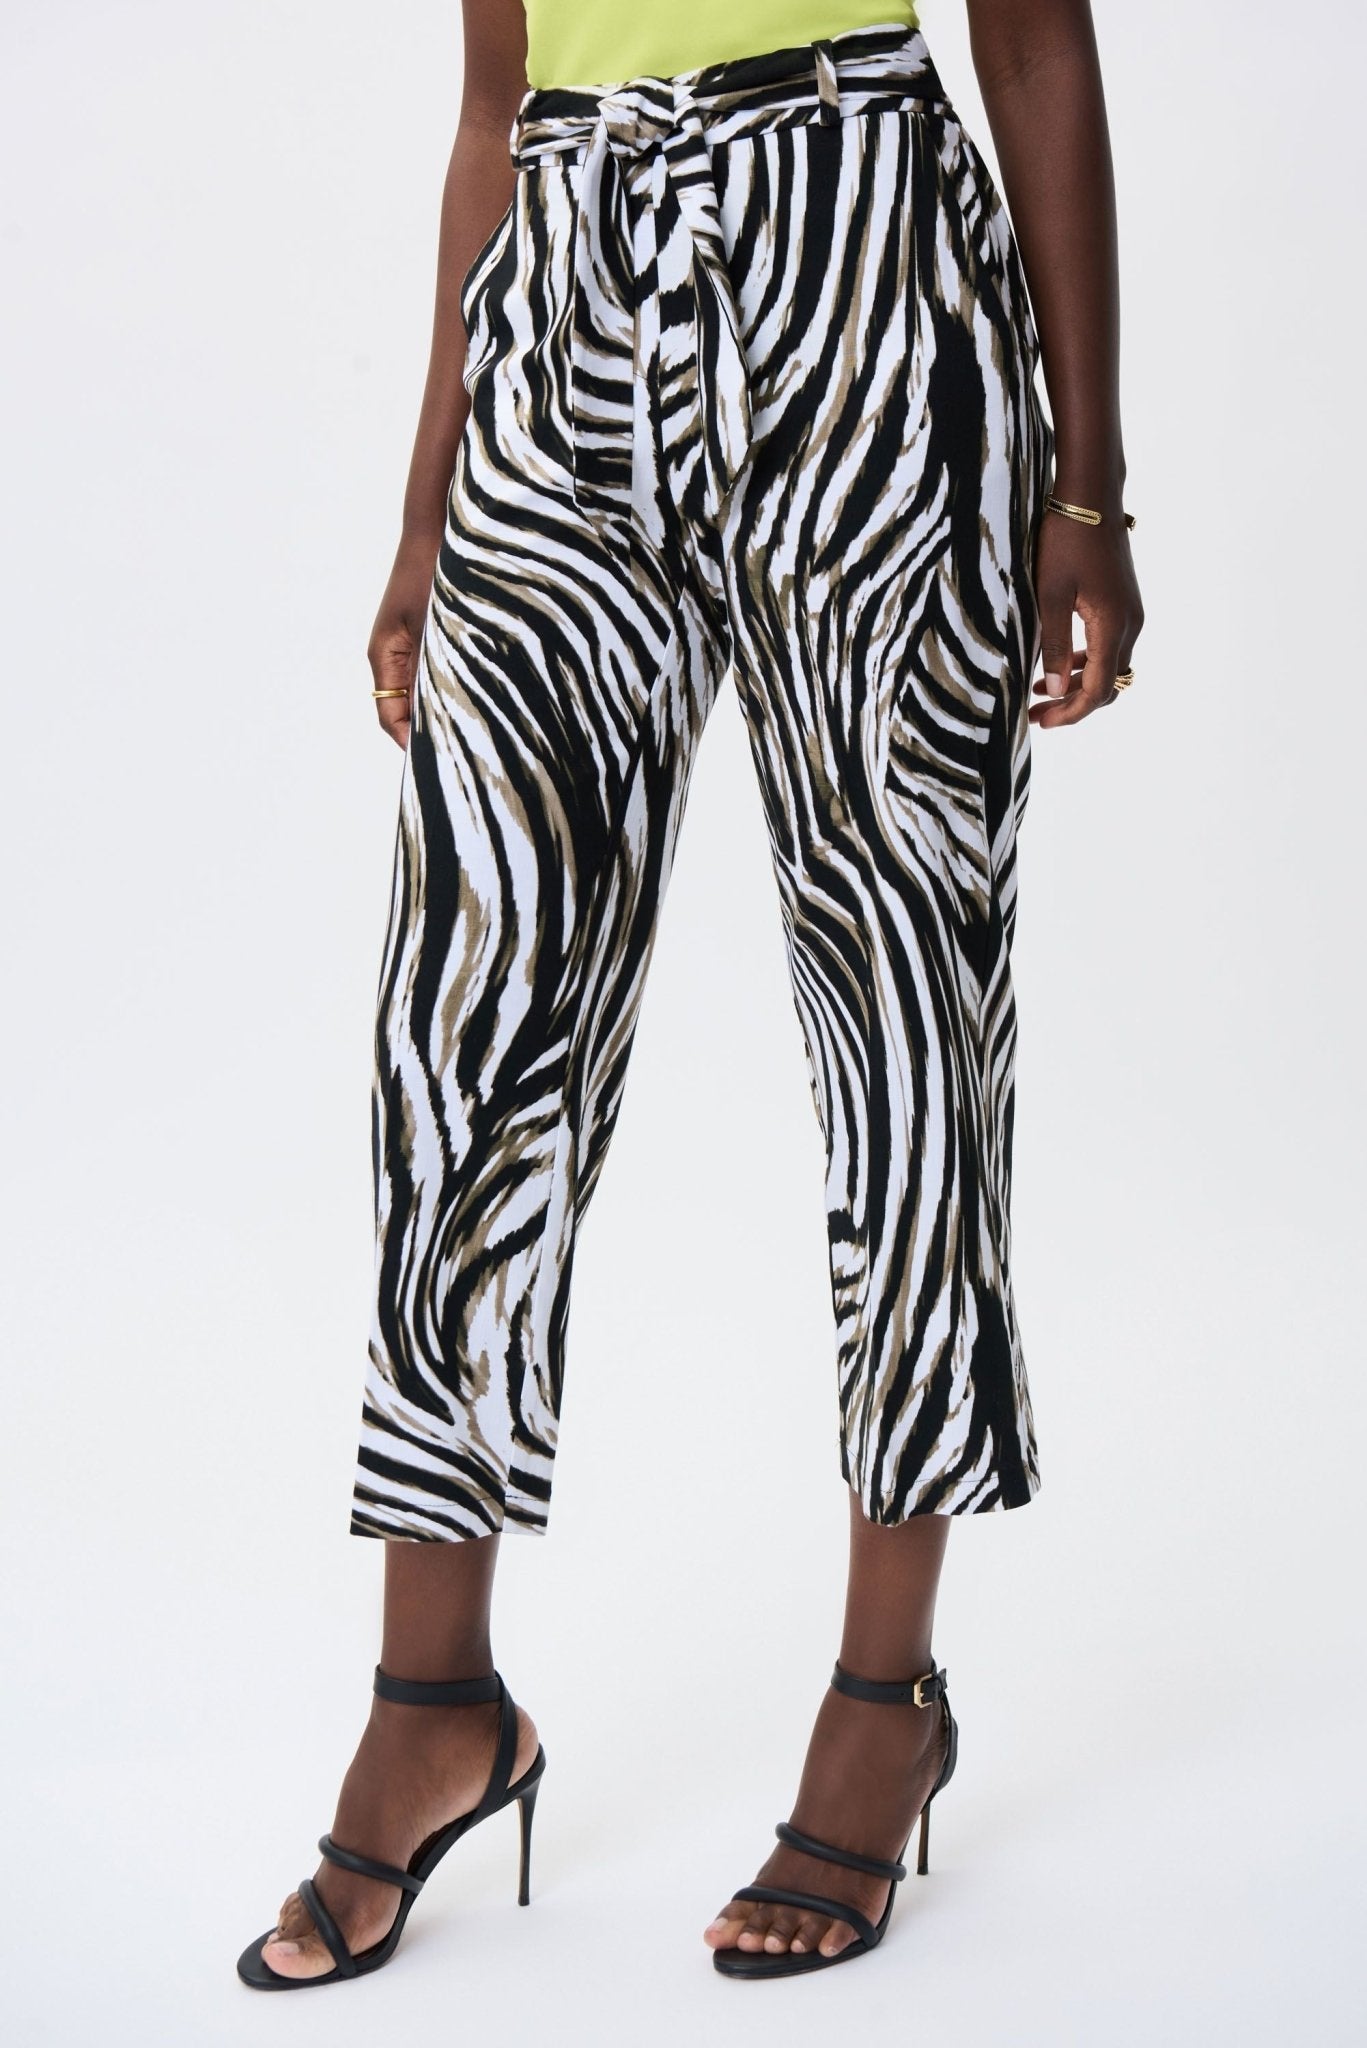 Shop Animal Print Wide Leg Pants Style 231116 | Vanilla/Multi - Joseph Ribkoff